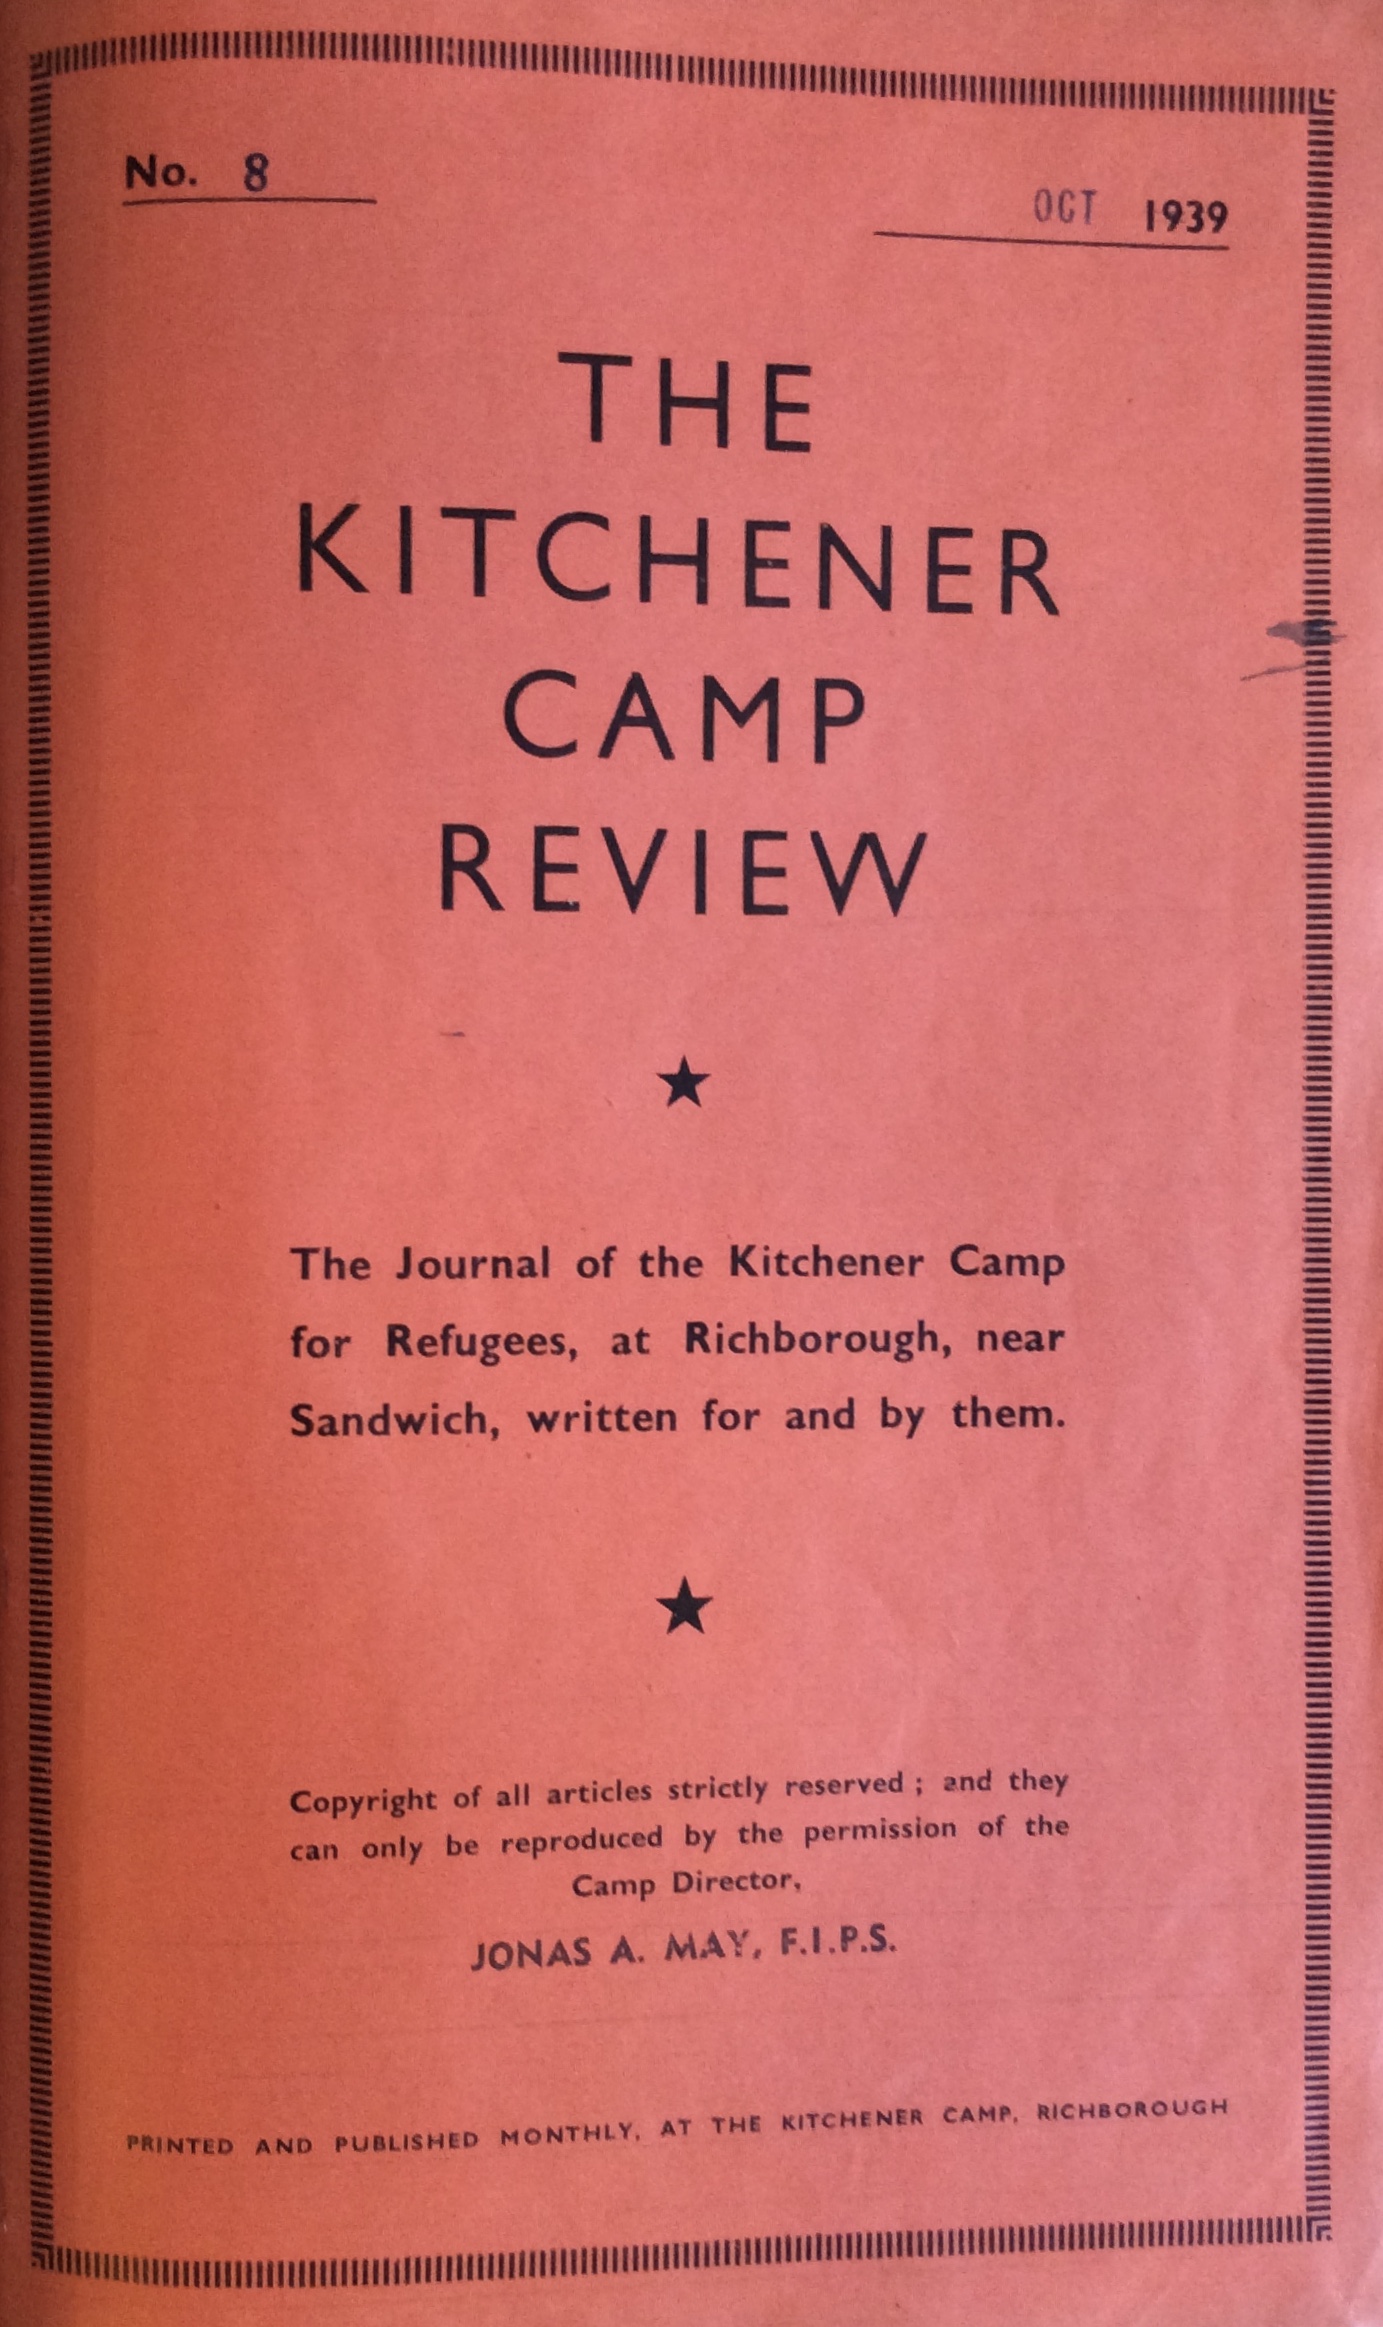 Kitchener Camp Review, October 1939